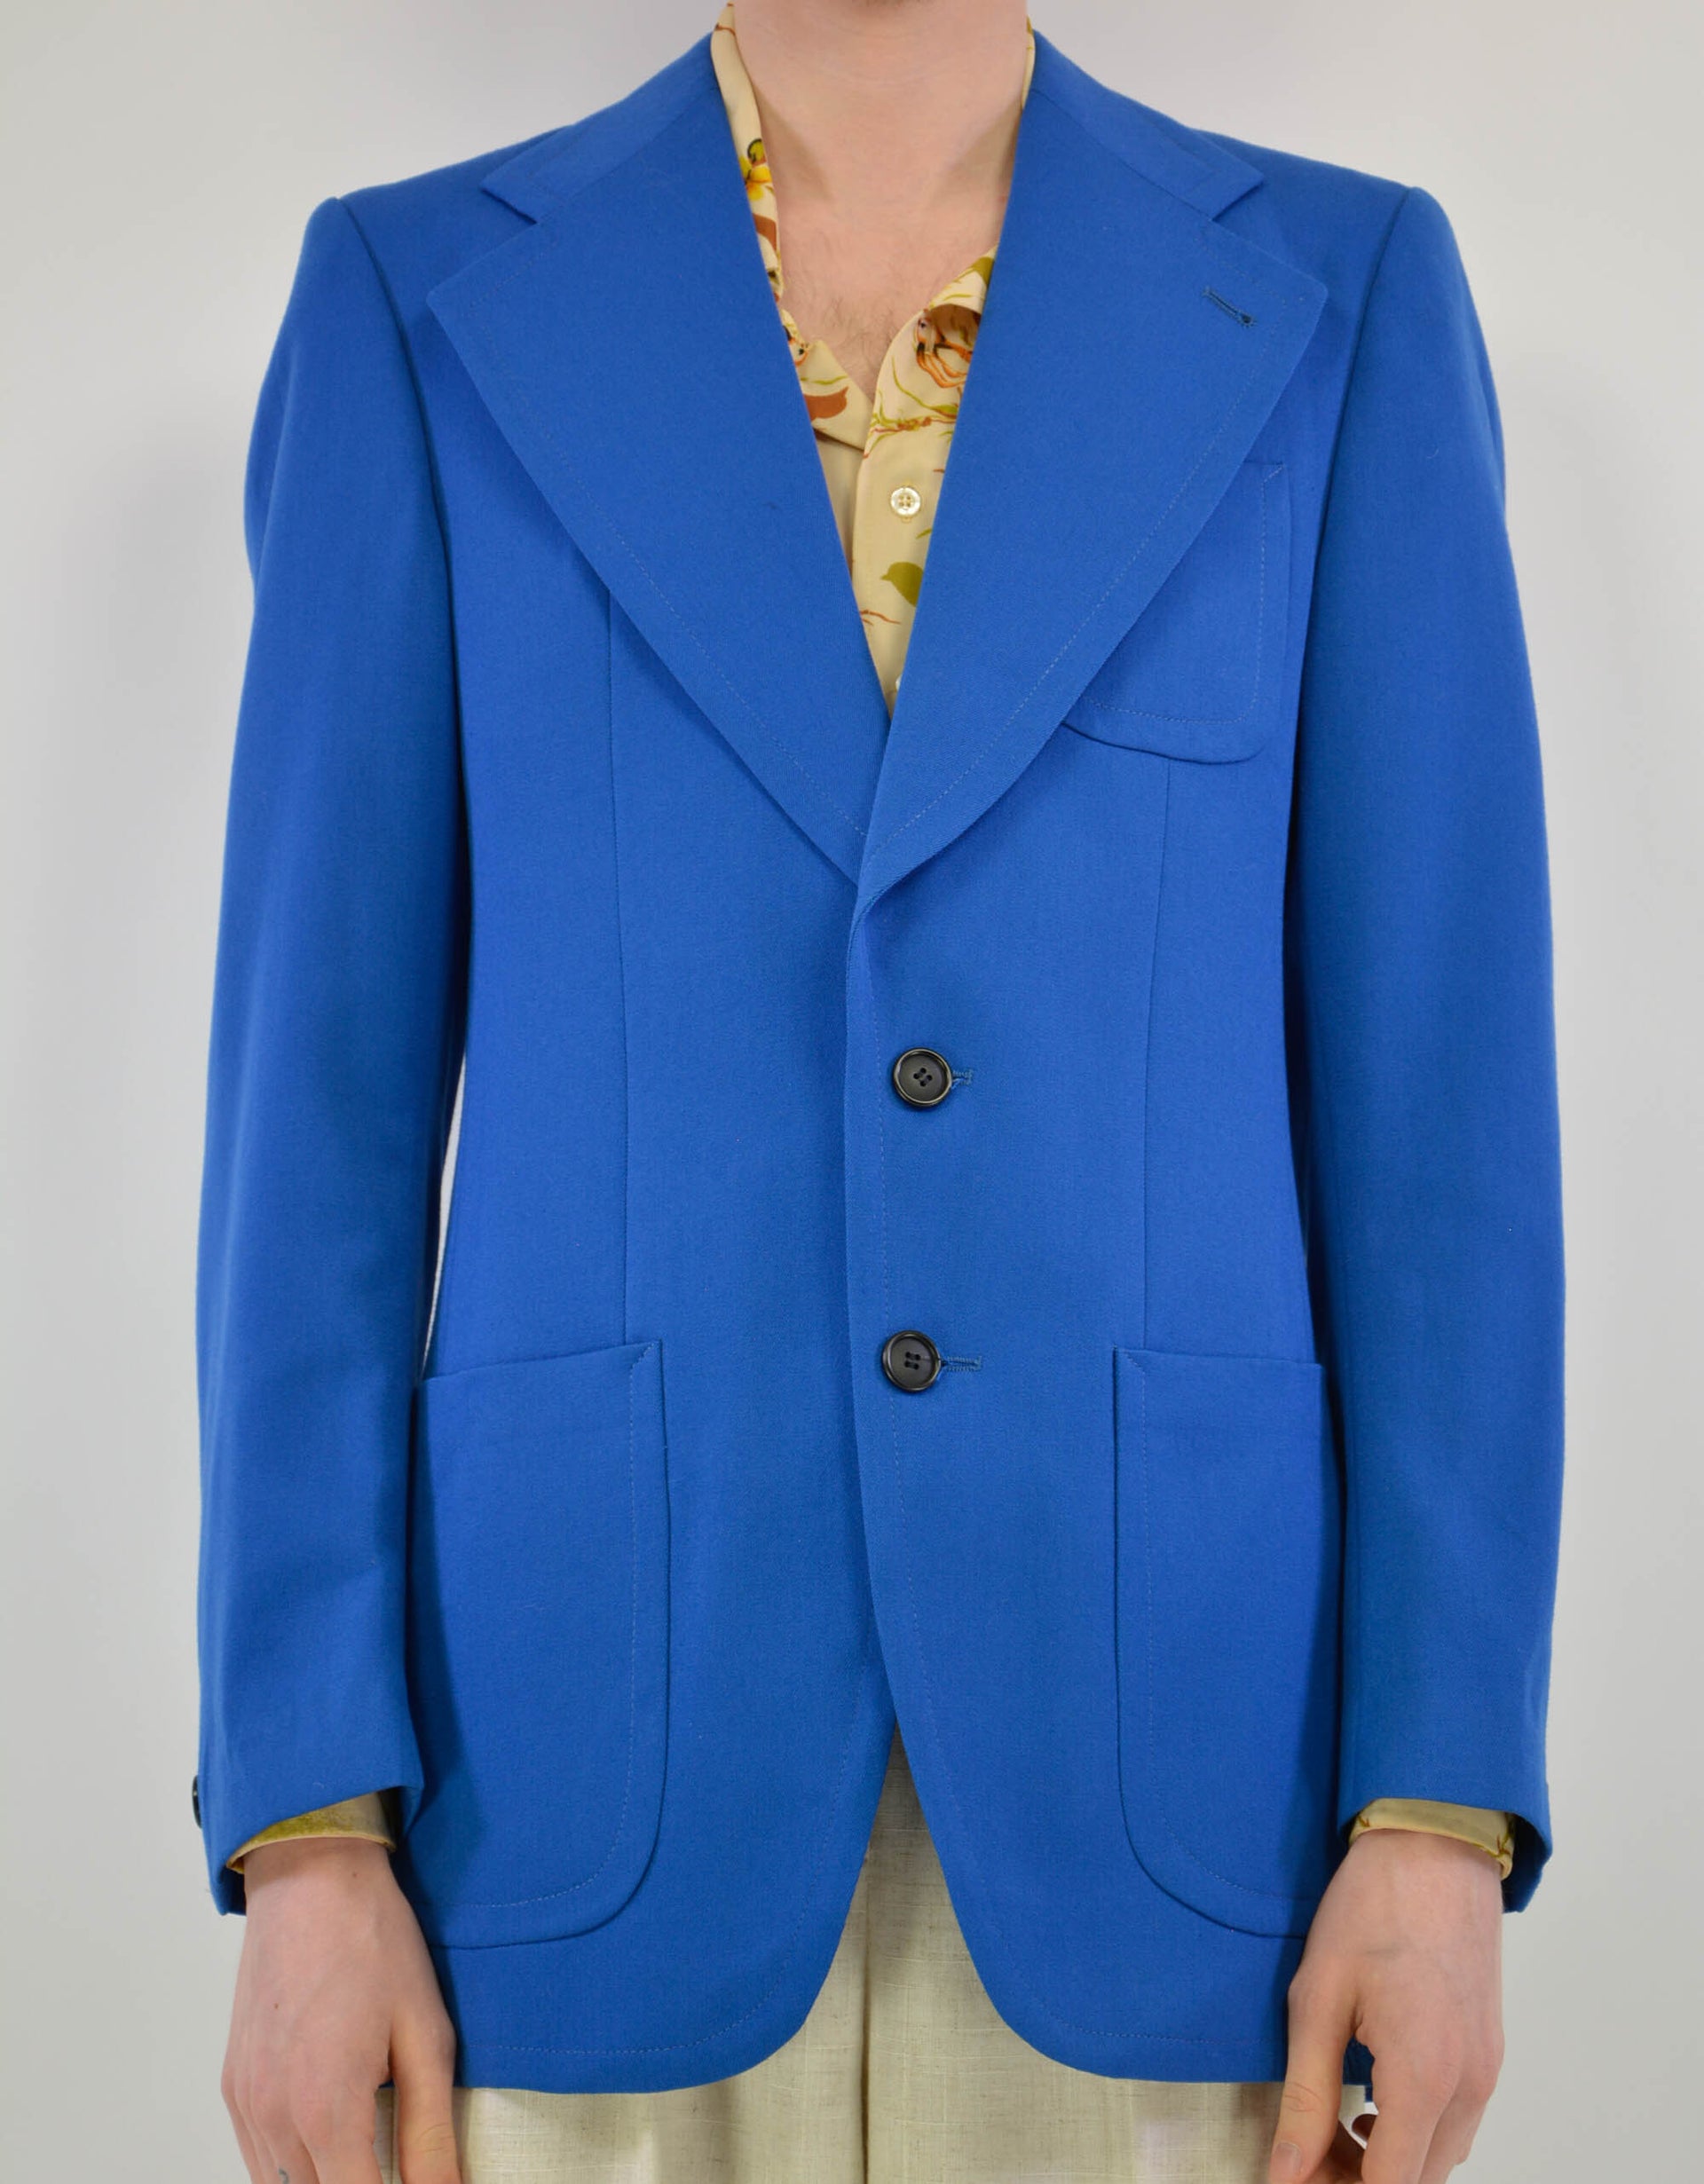 80s blue suit jacket - PICKNWEIGHT - VINTAGE KILO STORE